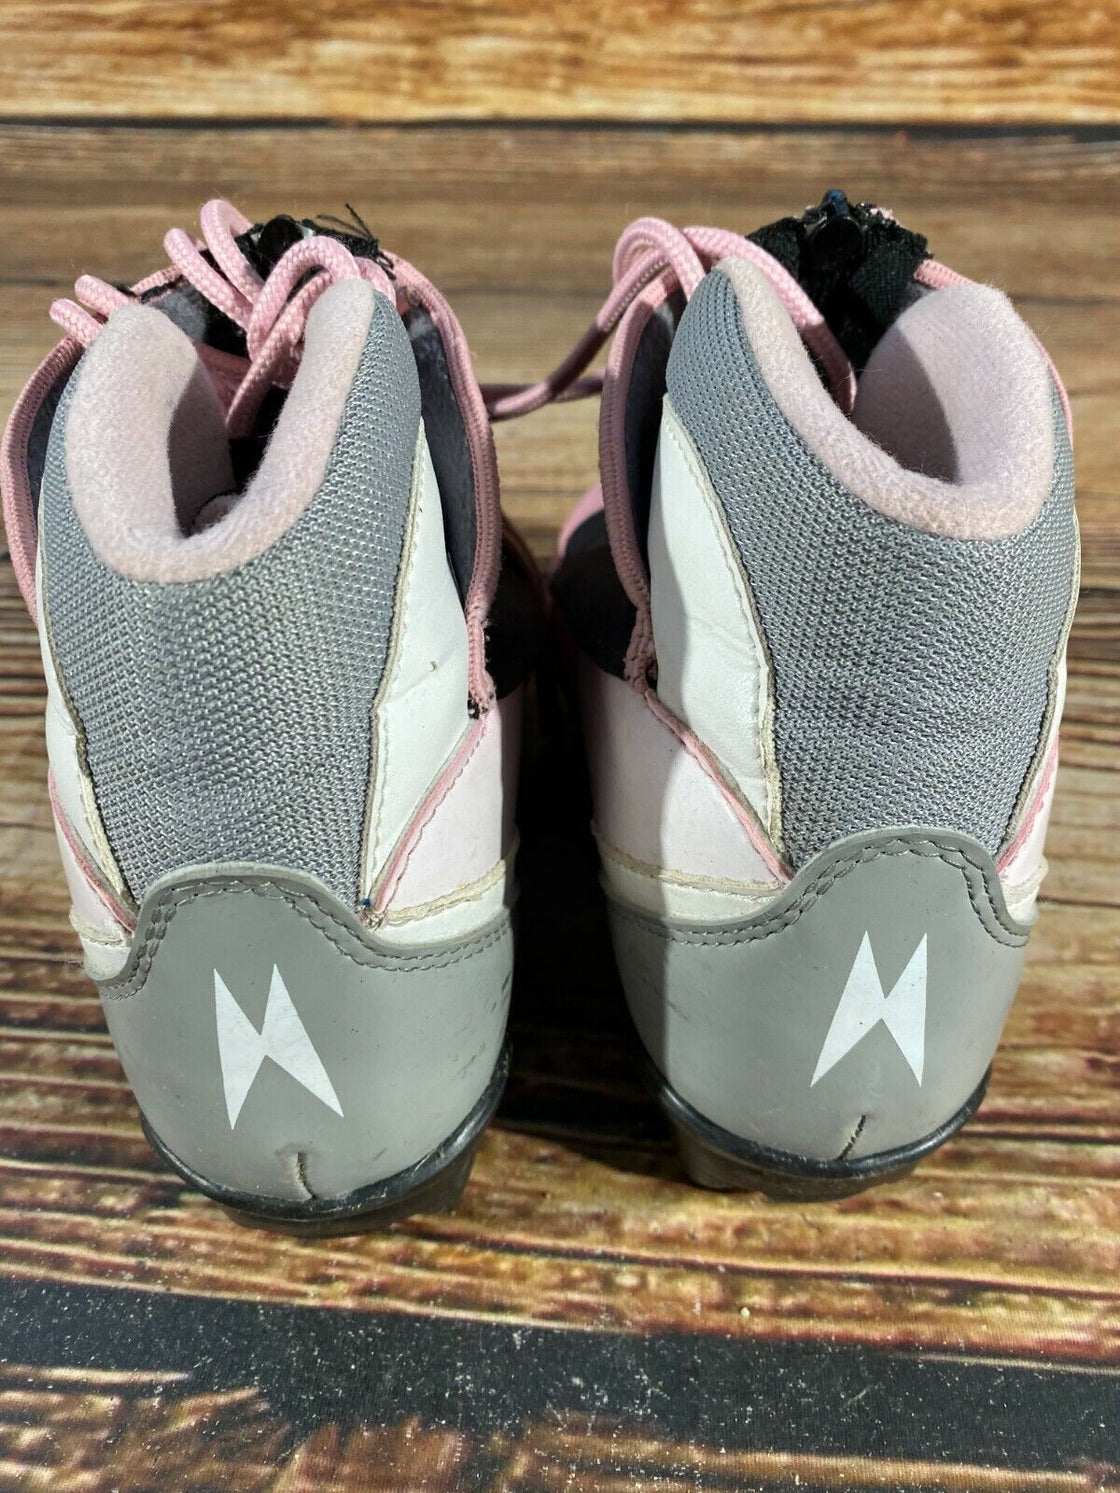 Madshus Buterfly Kids Cross Country Ski Boots Size EU32 US13.5 NNN bindings